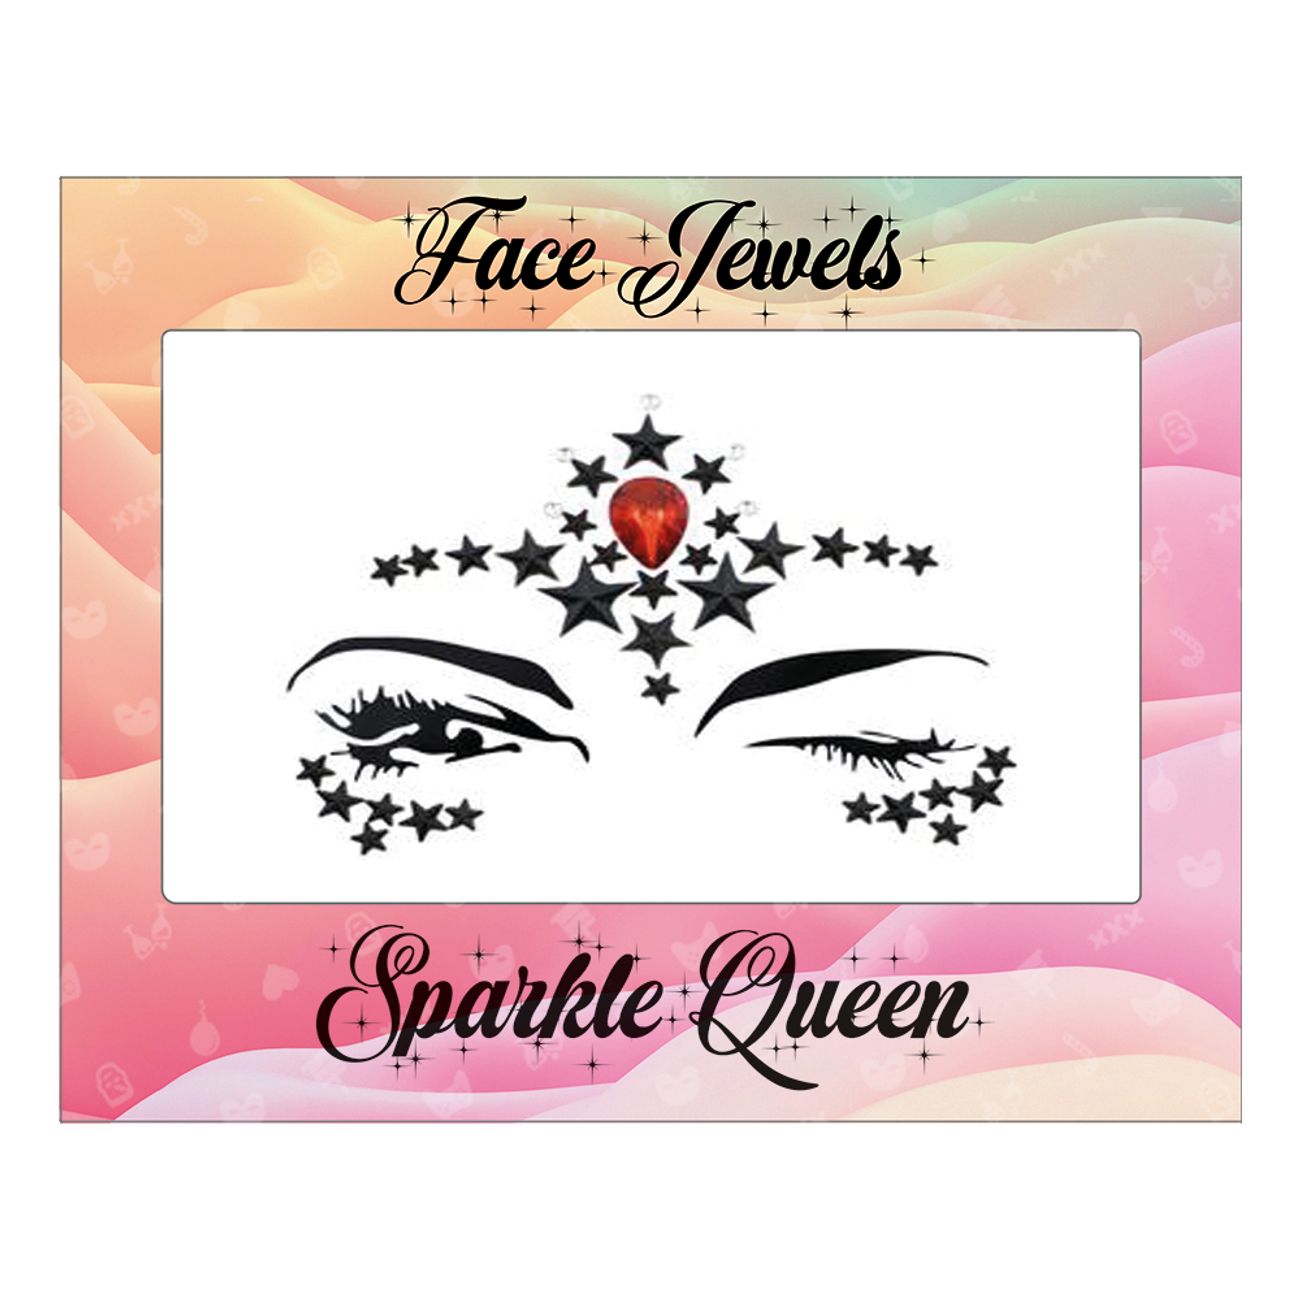 face-jewels-super-woman-82812-1